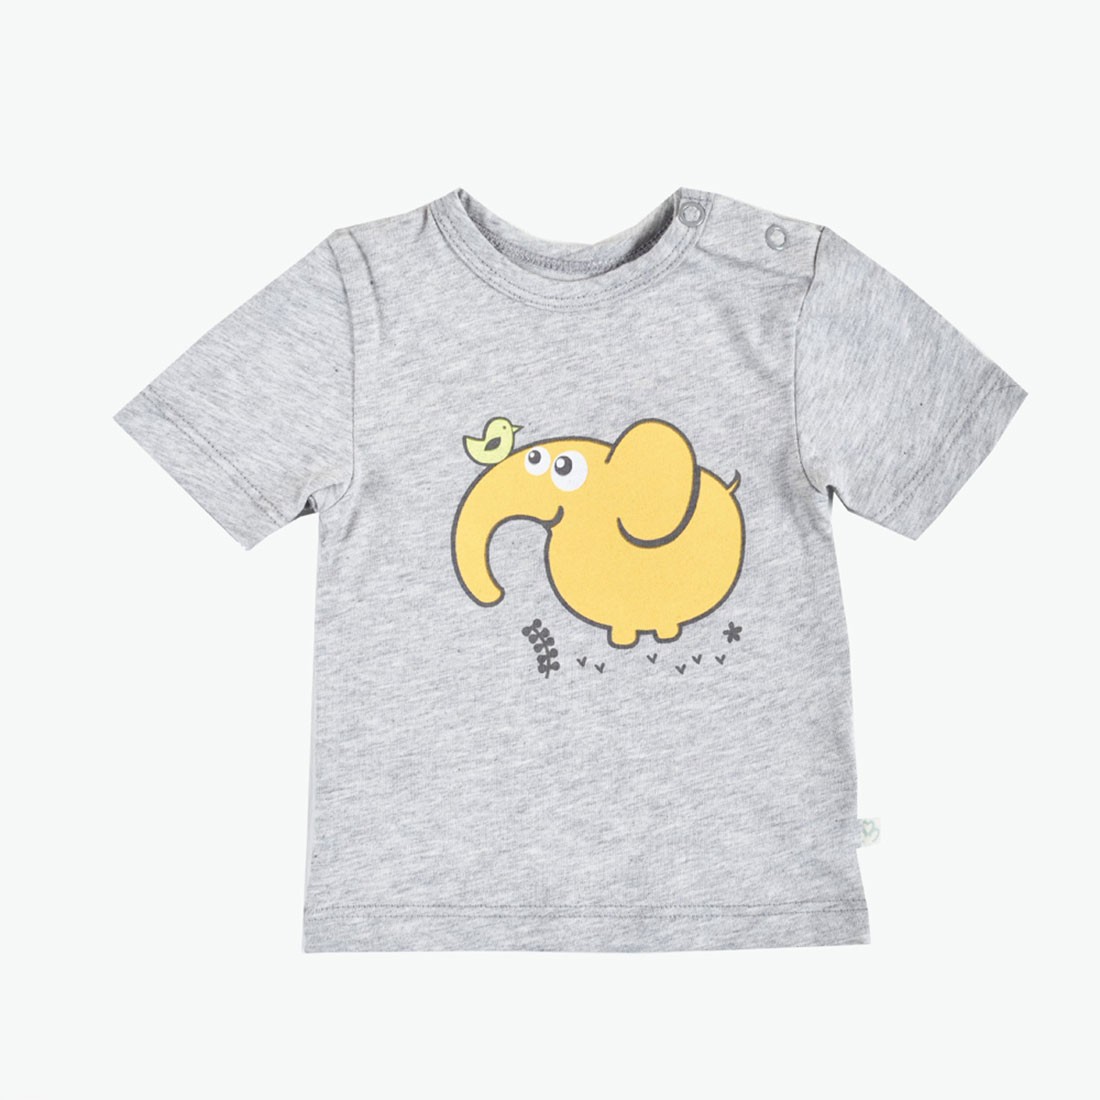 OrganicEra Organic T-shirt, Elephant